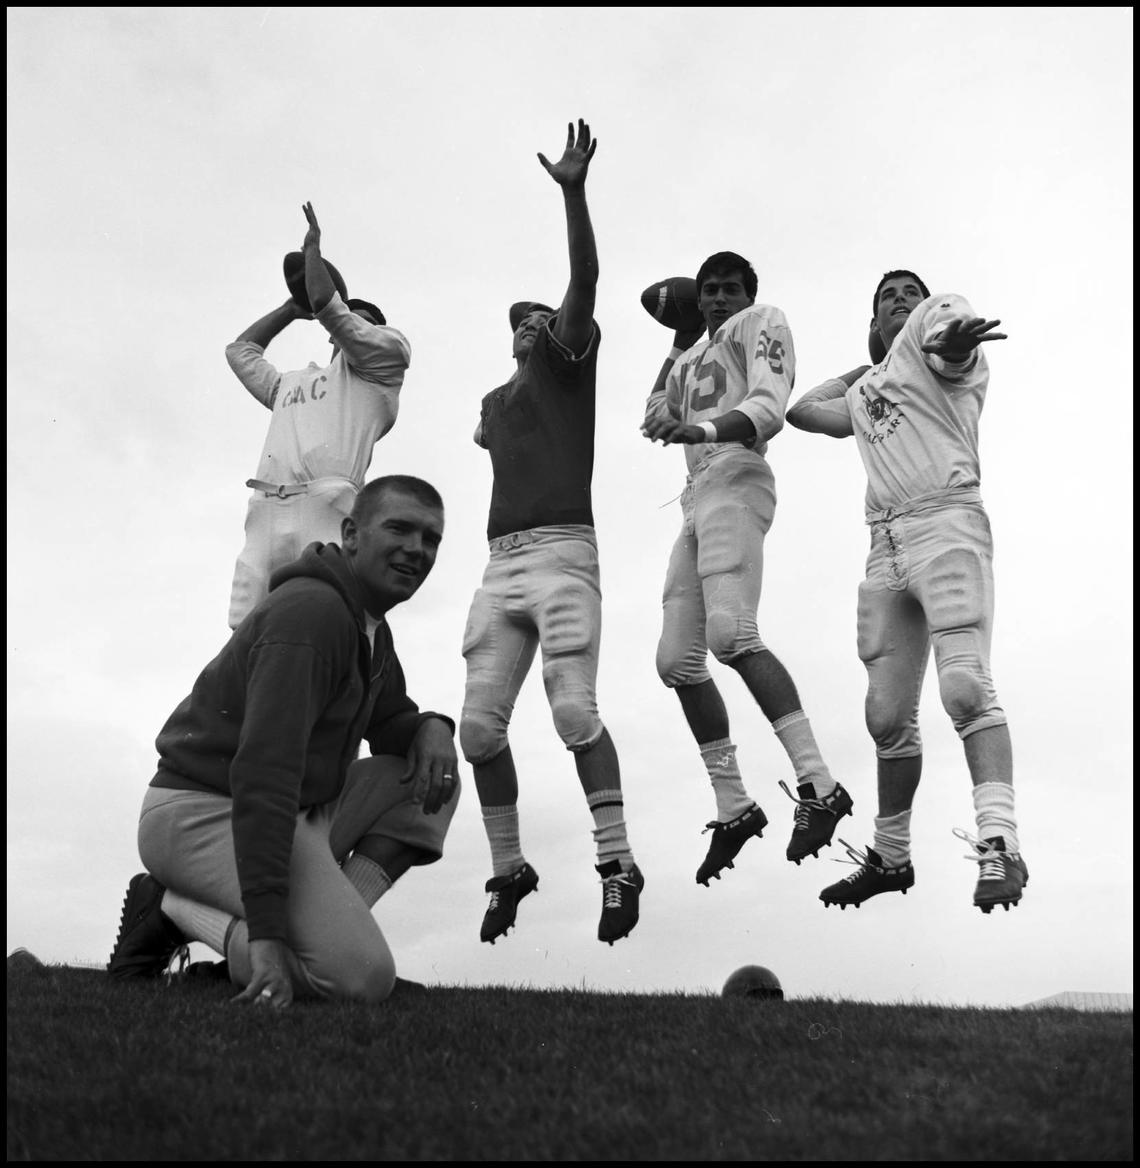 Coach Kadatz evaluates four players for the quarterback role in the 1960s.